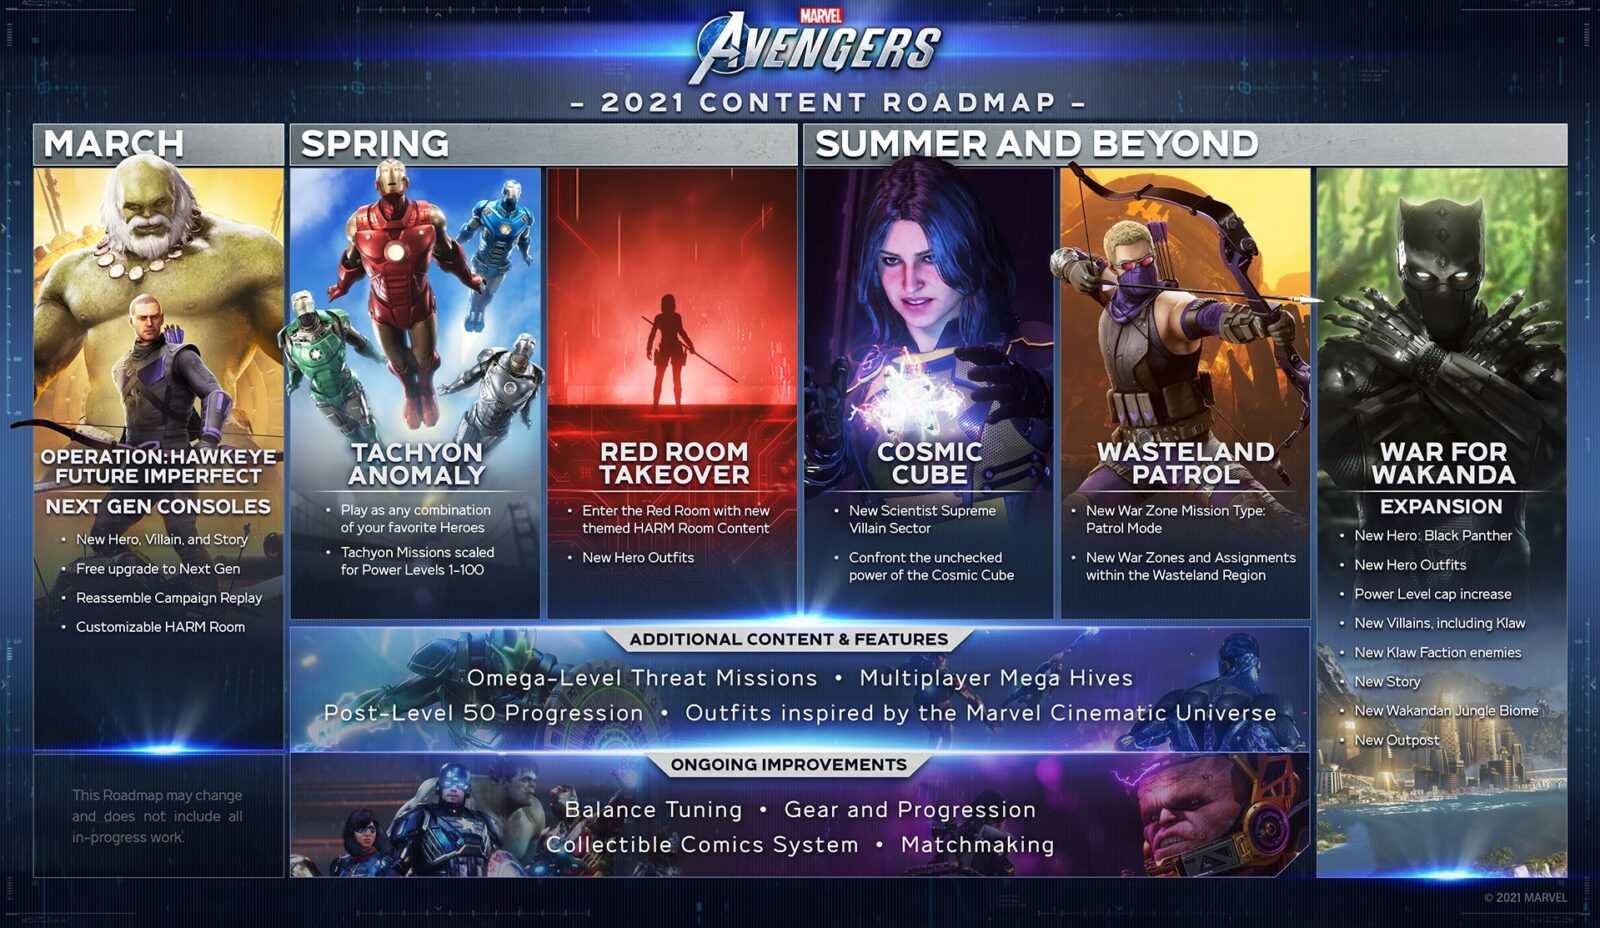 Annunciata la Marvel's Avengers Expansion War per Wakanda